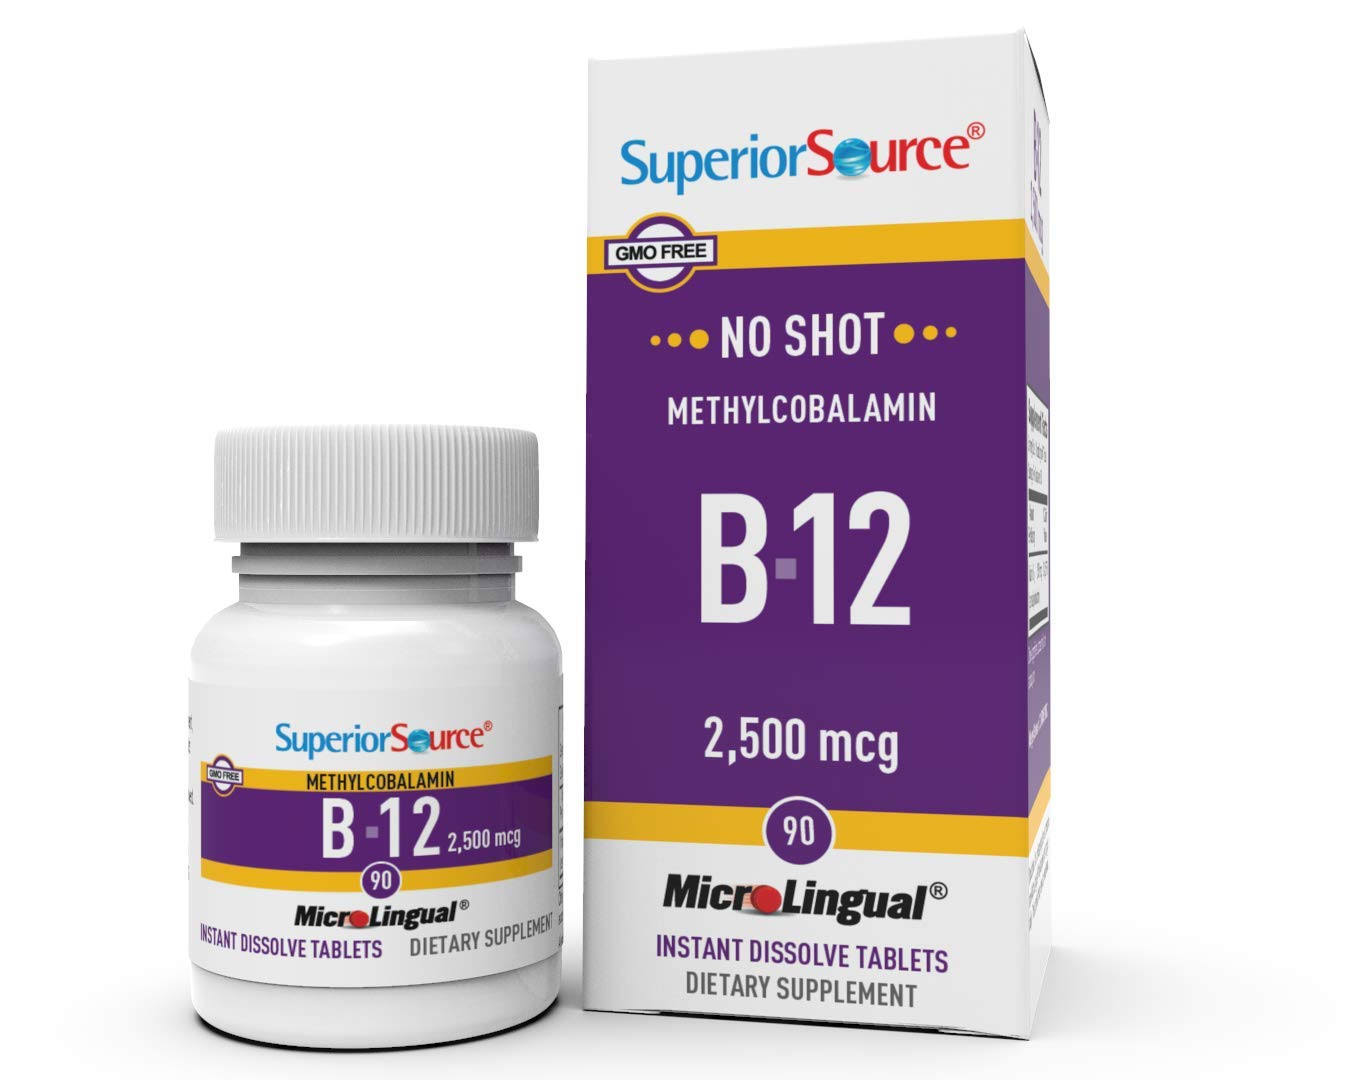 Superior Source - No Shot Methylcobalamin B-12 2,500 mcg - 90